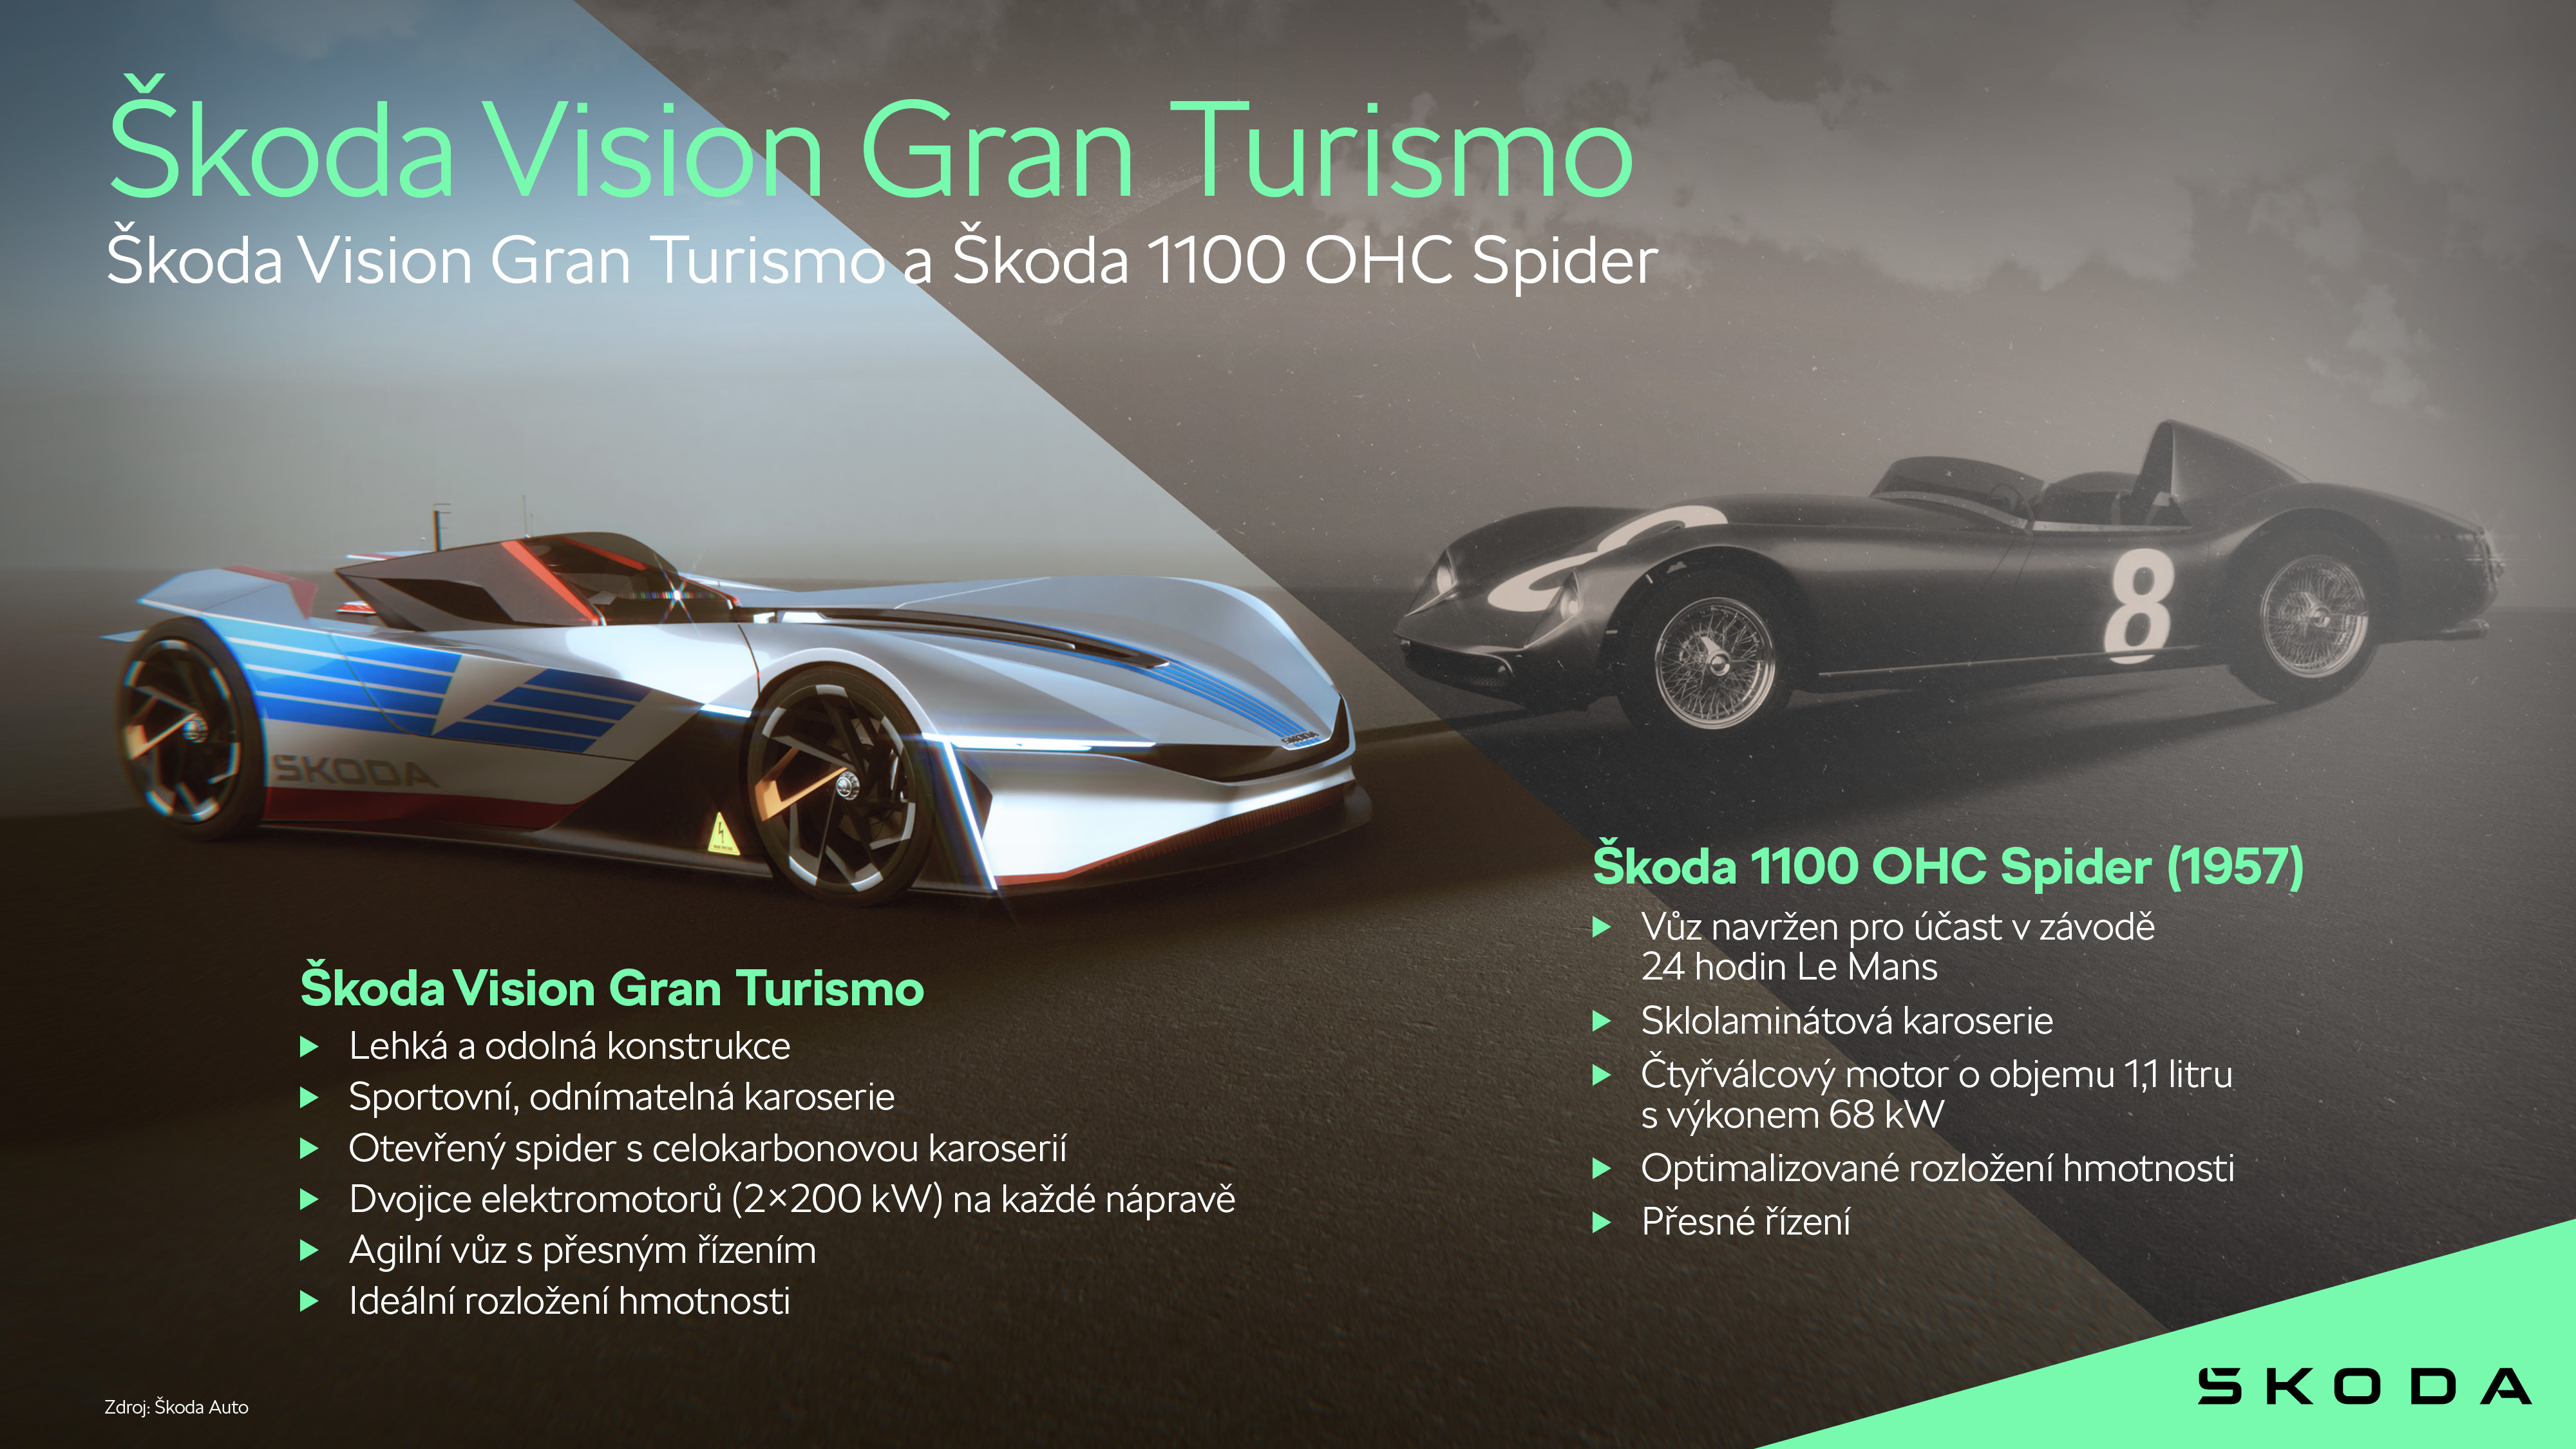 koda Kodiaq | Infografika koda Vision Gran Turismo a koda 1100 OHC Spider